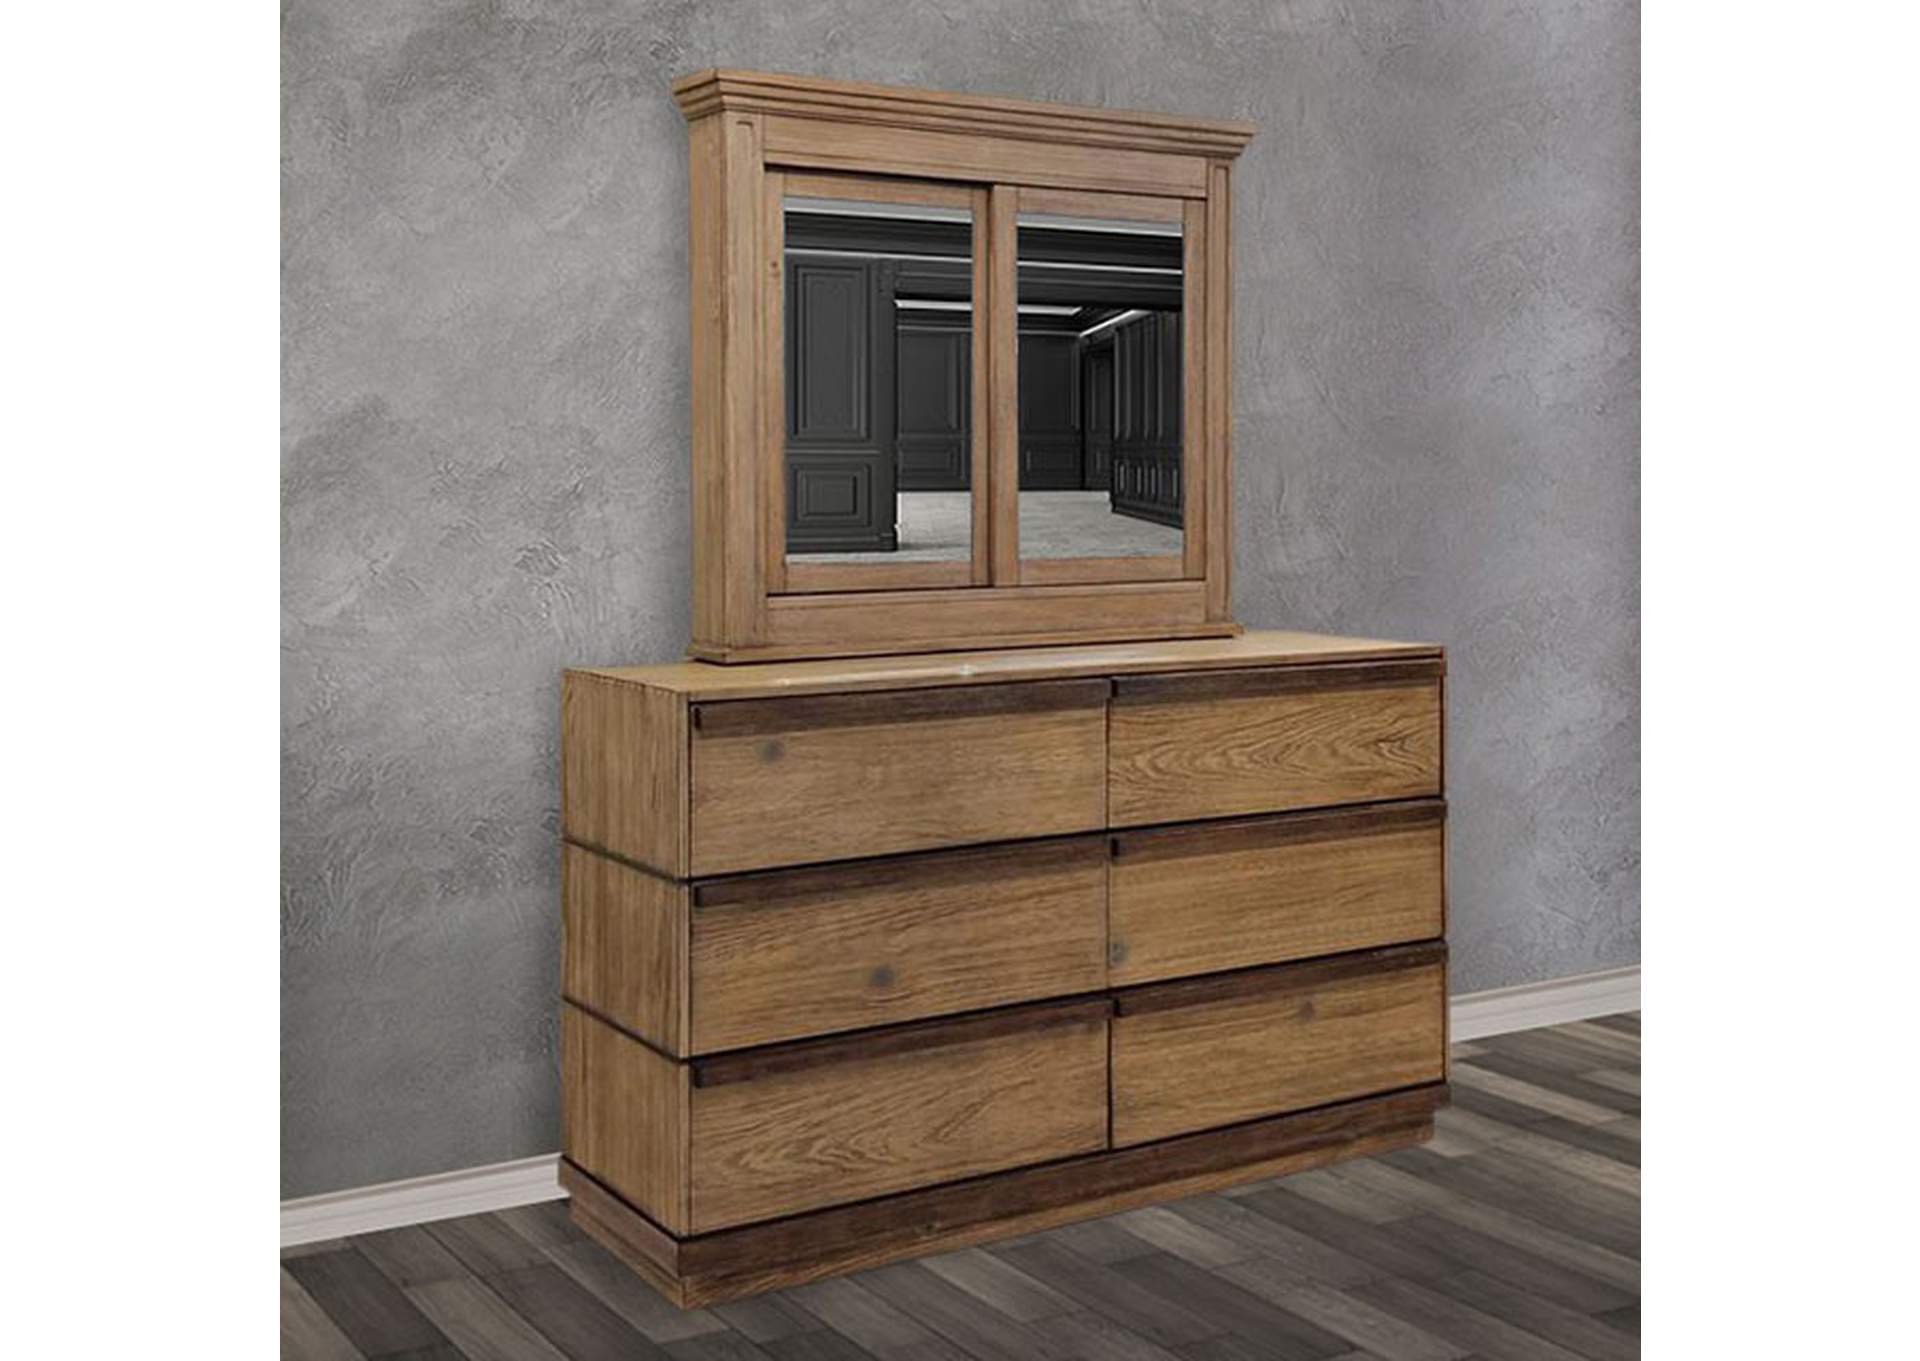 Coimbra Cabinet Mirror,Furniture of America